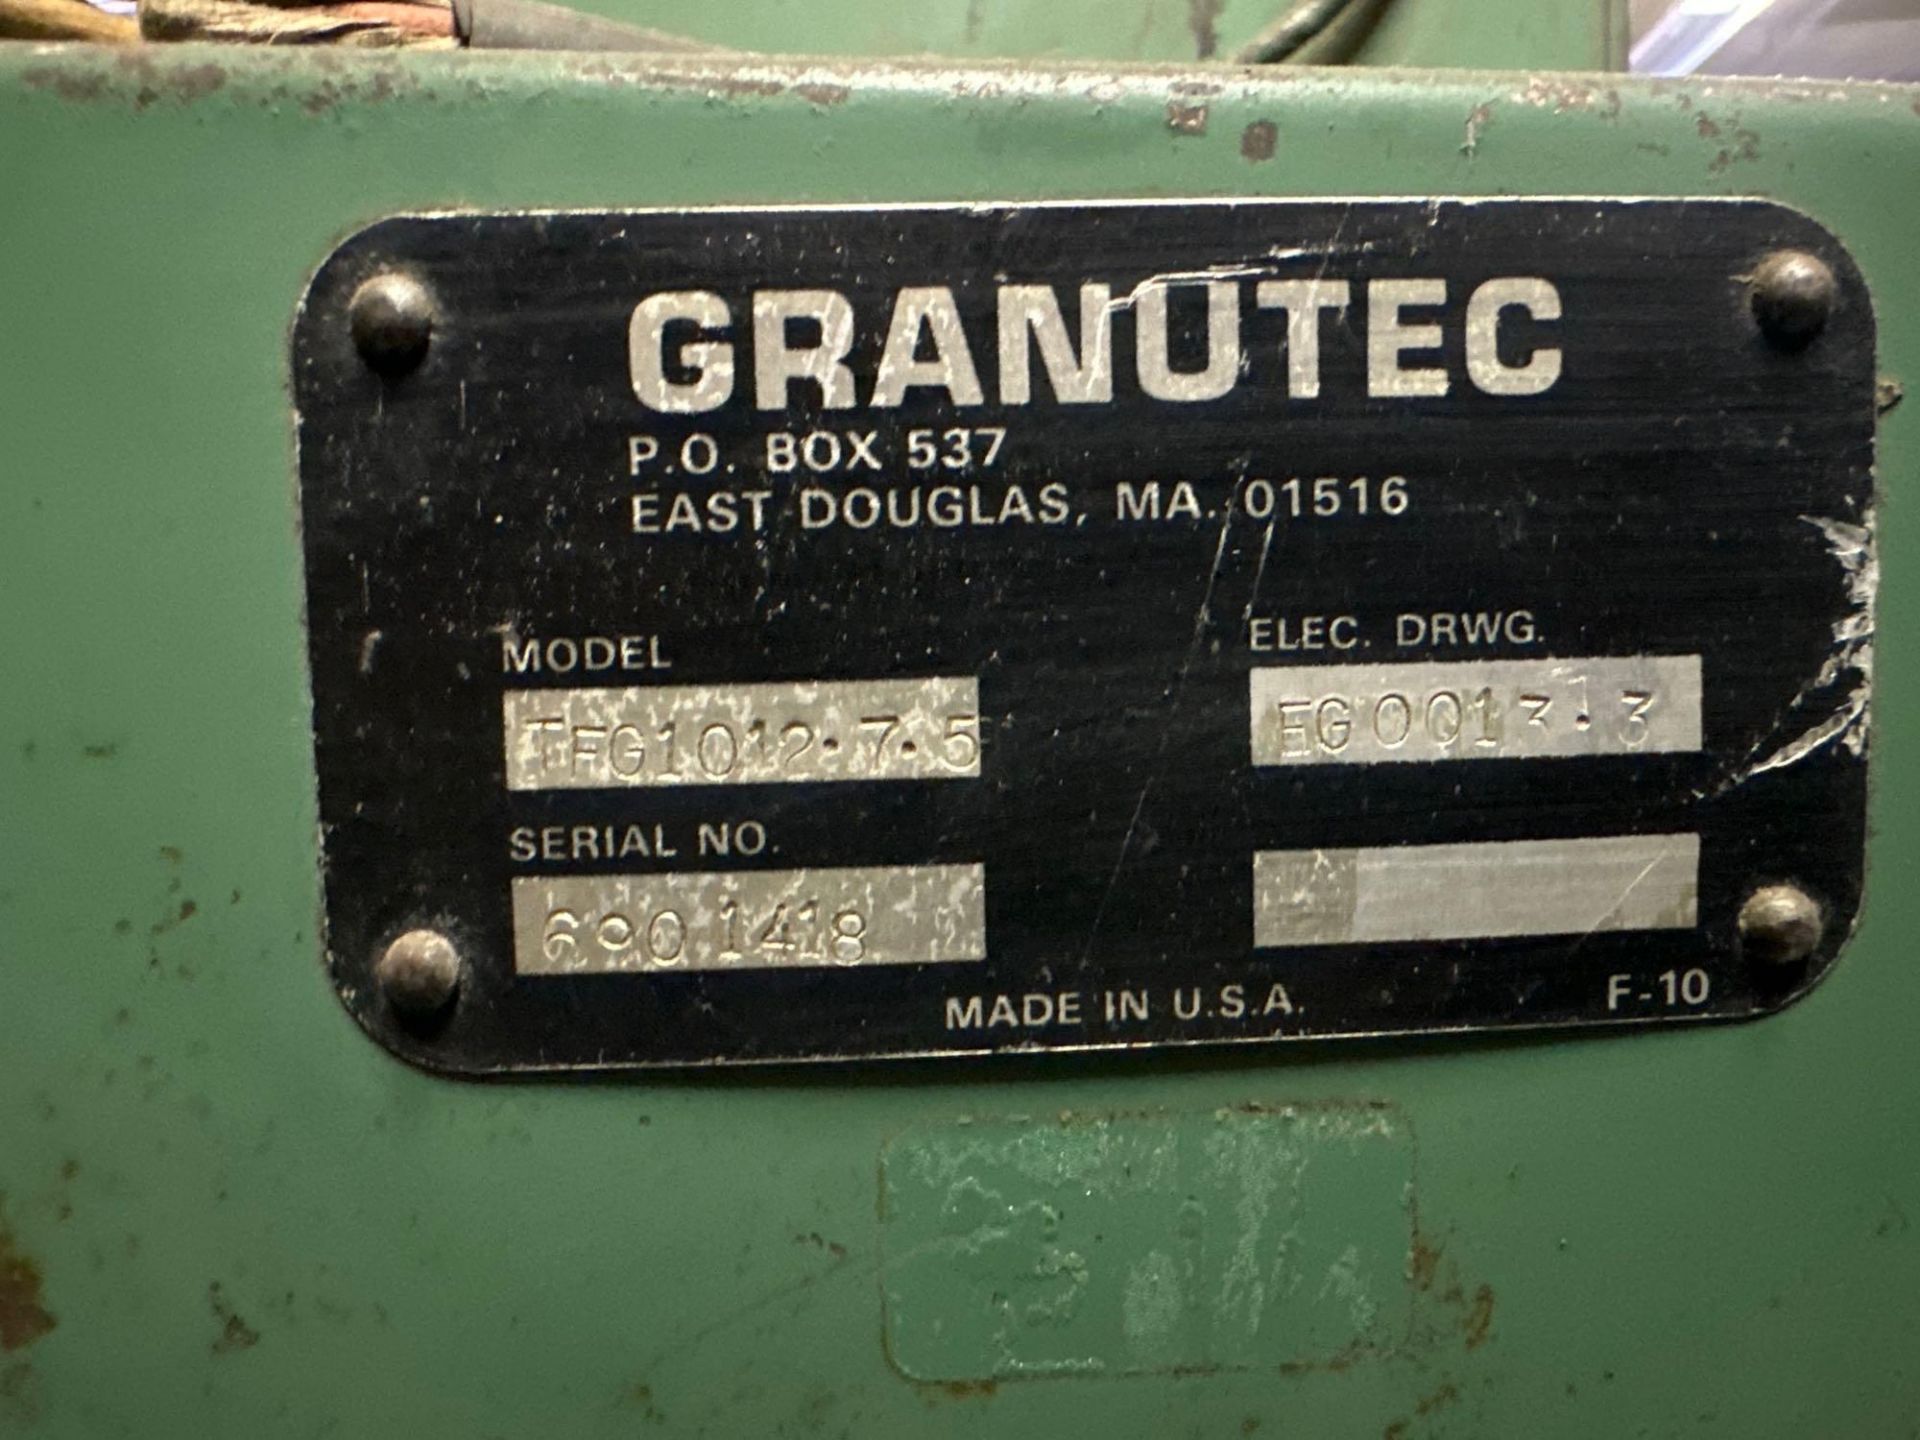 Granutec TFG1012.7.5 Used Granulator, 11.5" x 11.5", 7.5hp, 460V, s/n 6901418 - Image 8 of 9